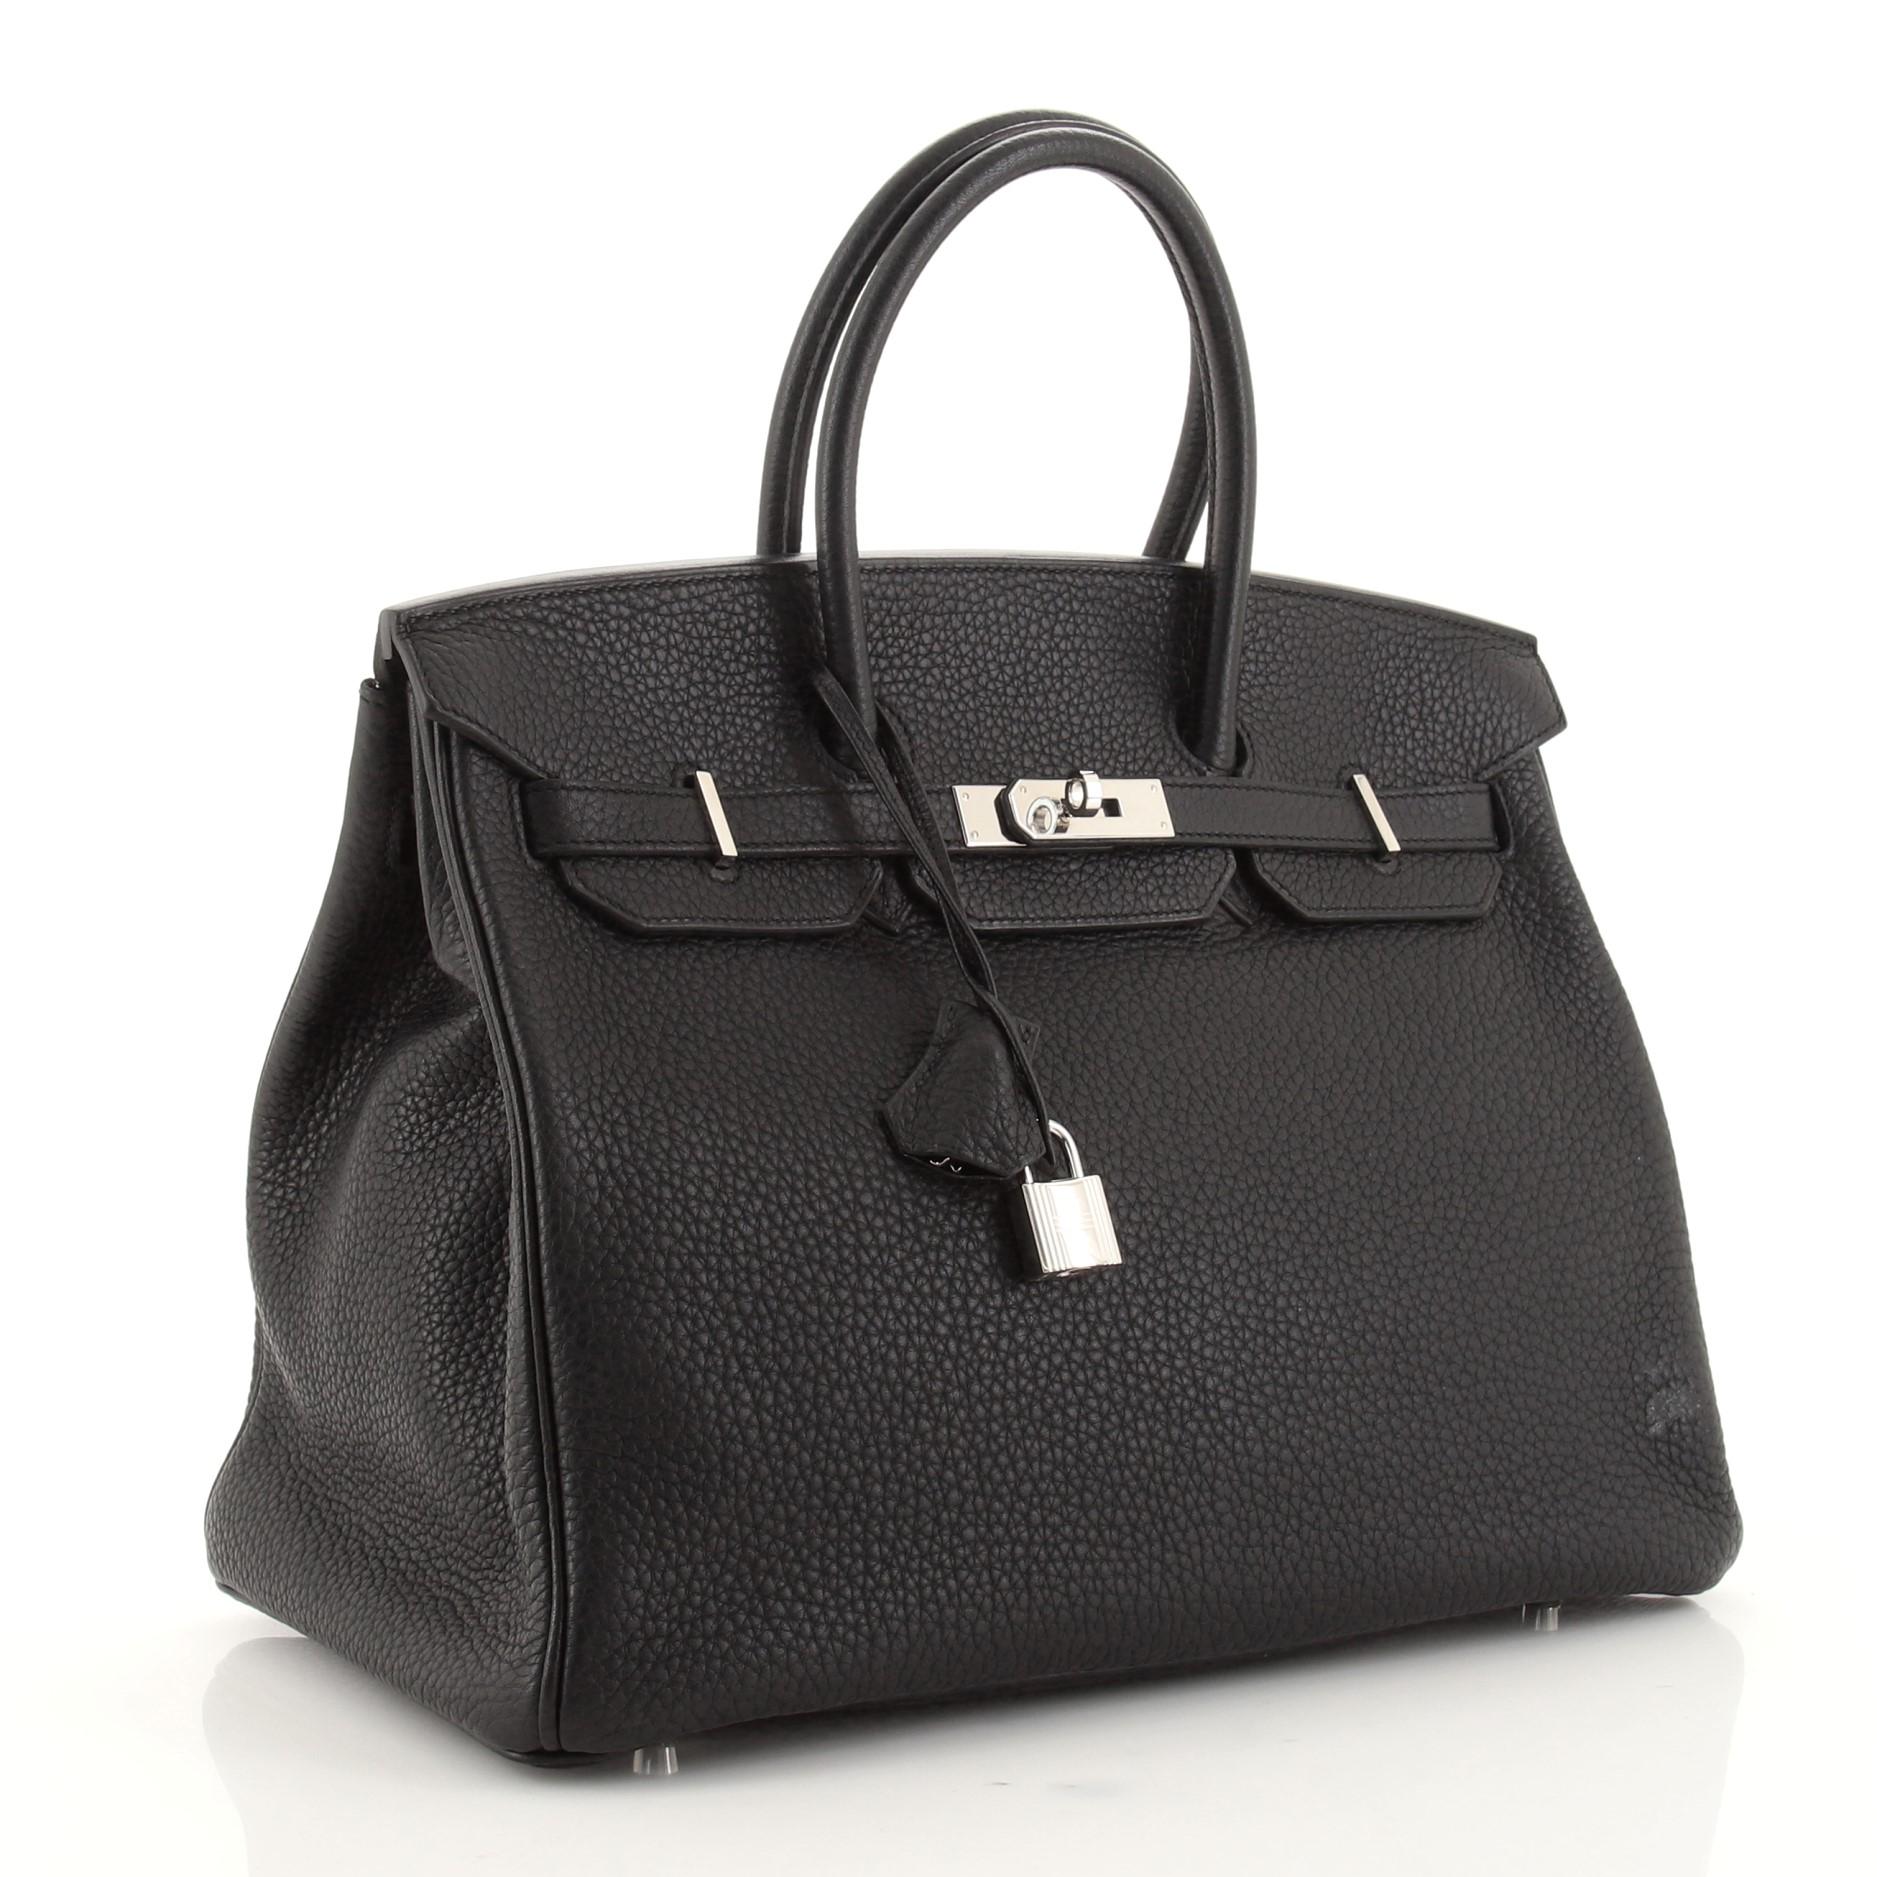 Black Hermes Birkin Handbag Noir Clemence with Palladium Hardware 35